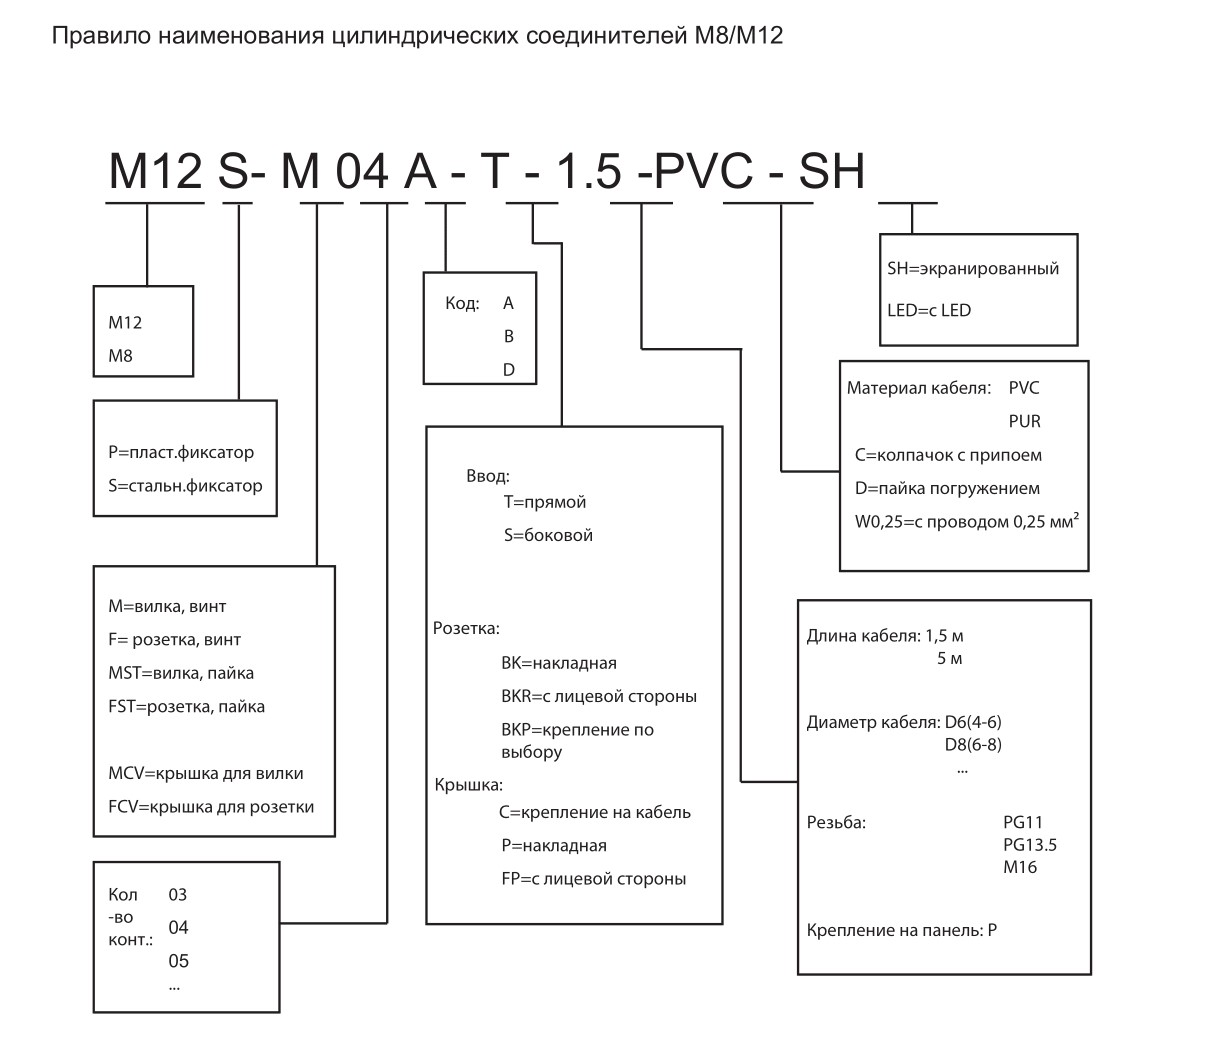 Цилиндрический соединитель-вилка с проводом M12-M04D-BK-M16-W0.25 1632043014021: Структура обозначения